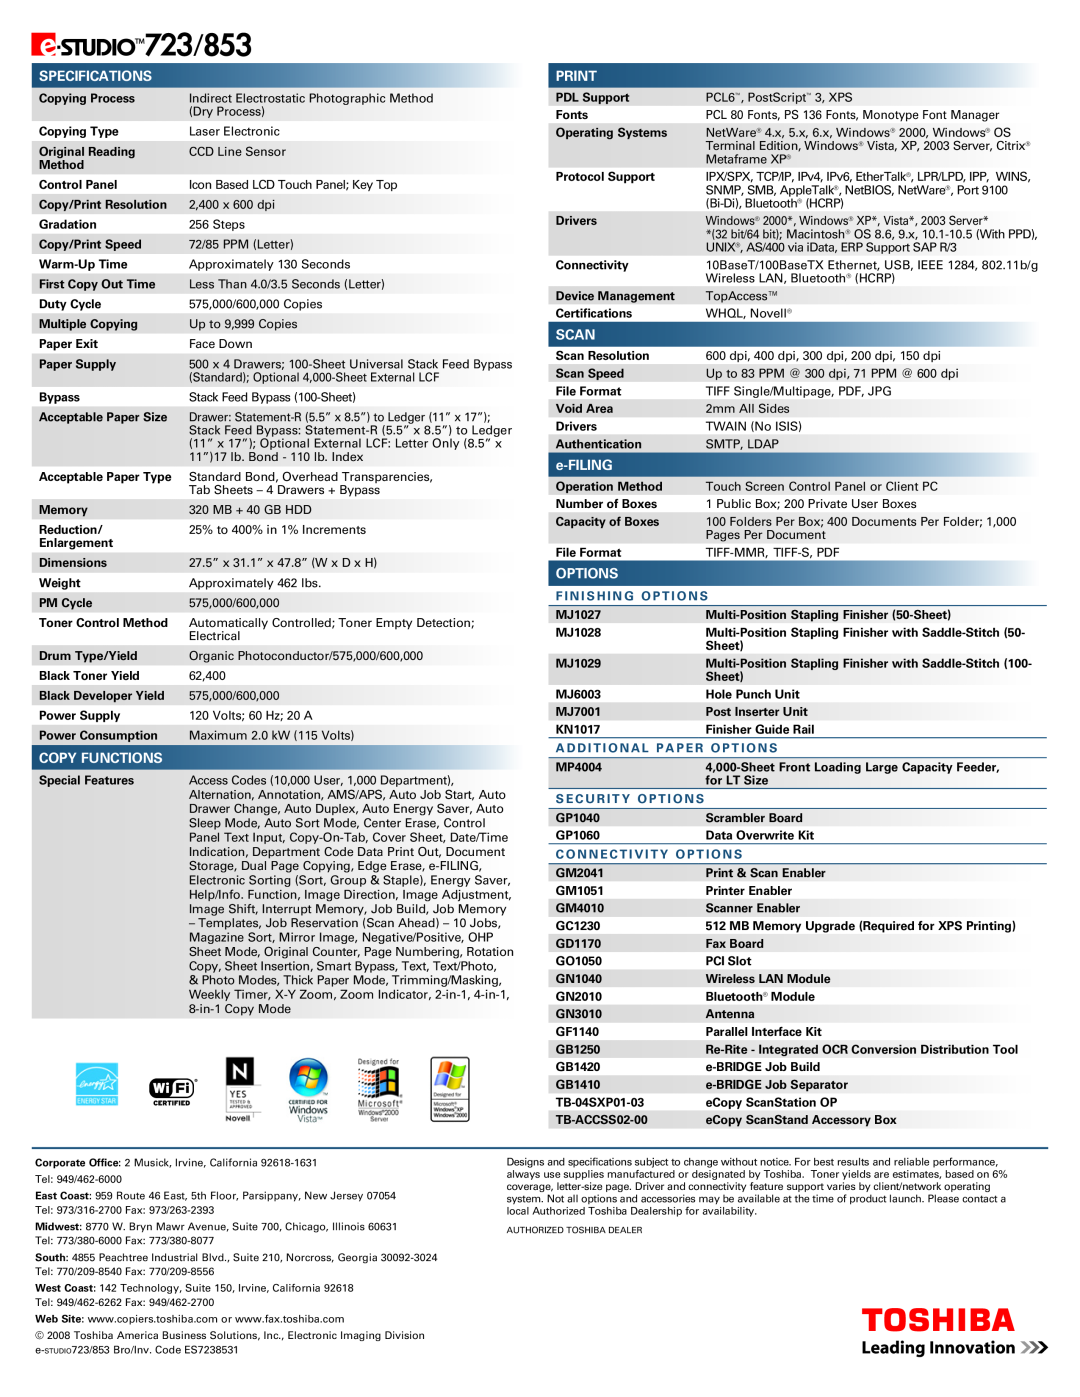 Toshiba eSTUDIO 723 manual Specifications, Copy Functions, Print, Scan, e-FILING, Options, F I N I S H I N G O P T I O N S 